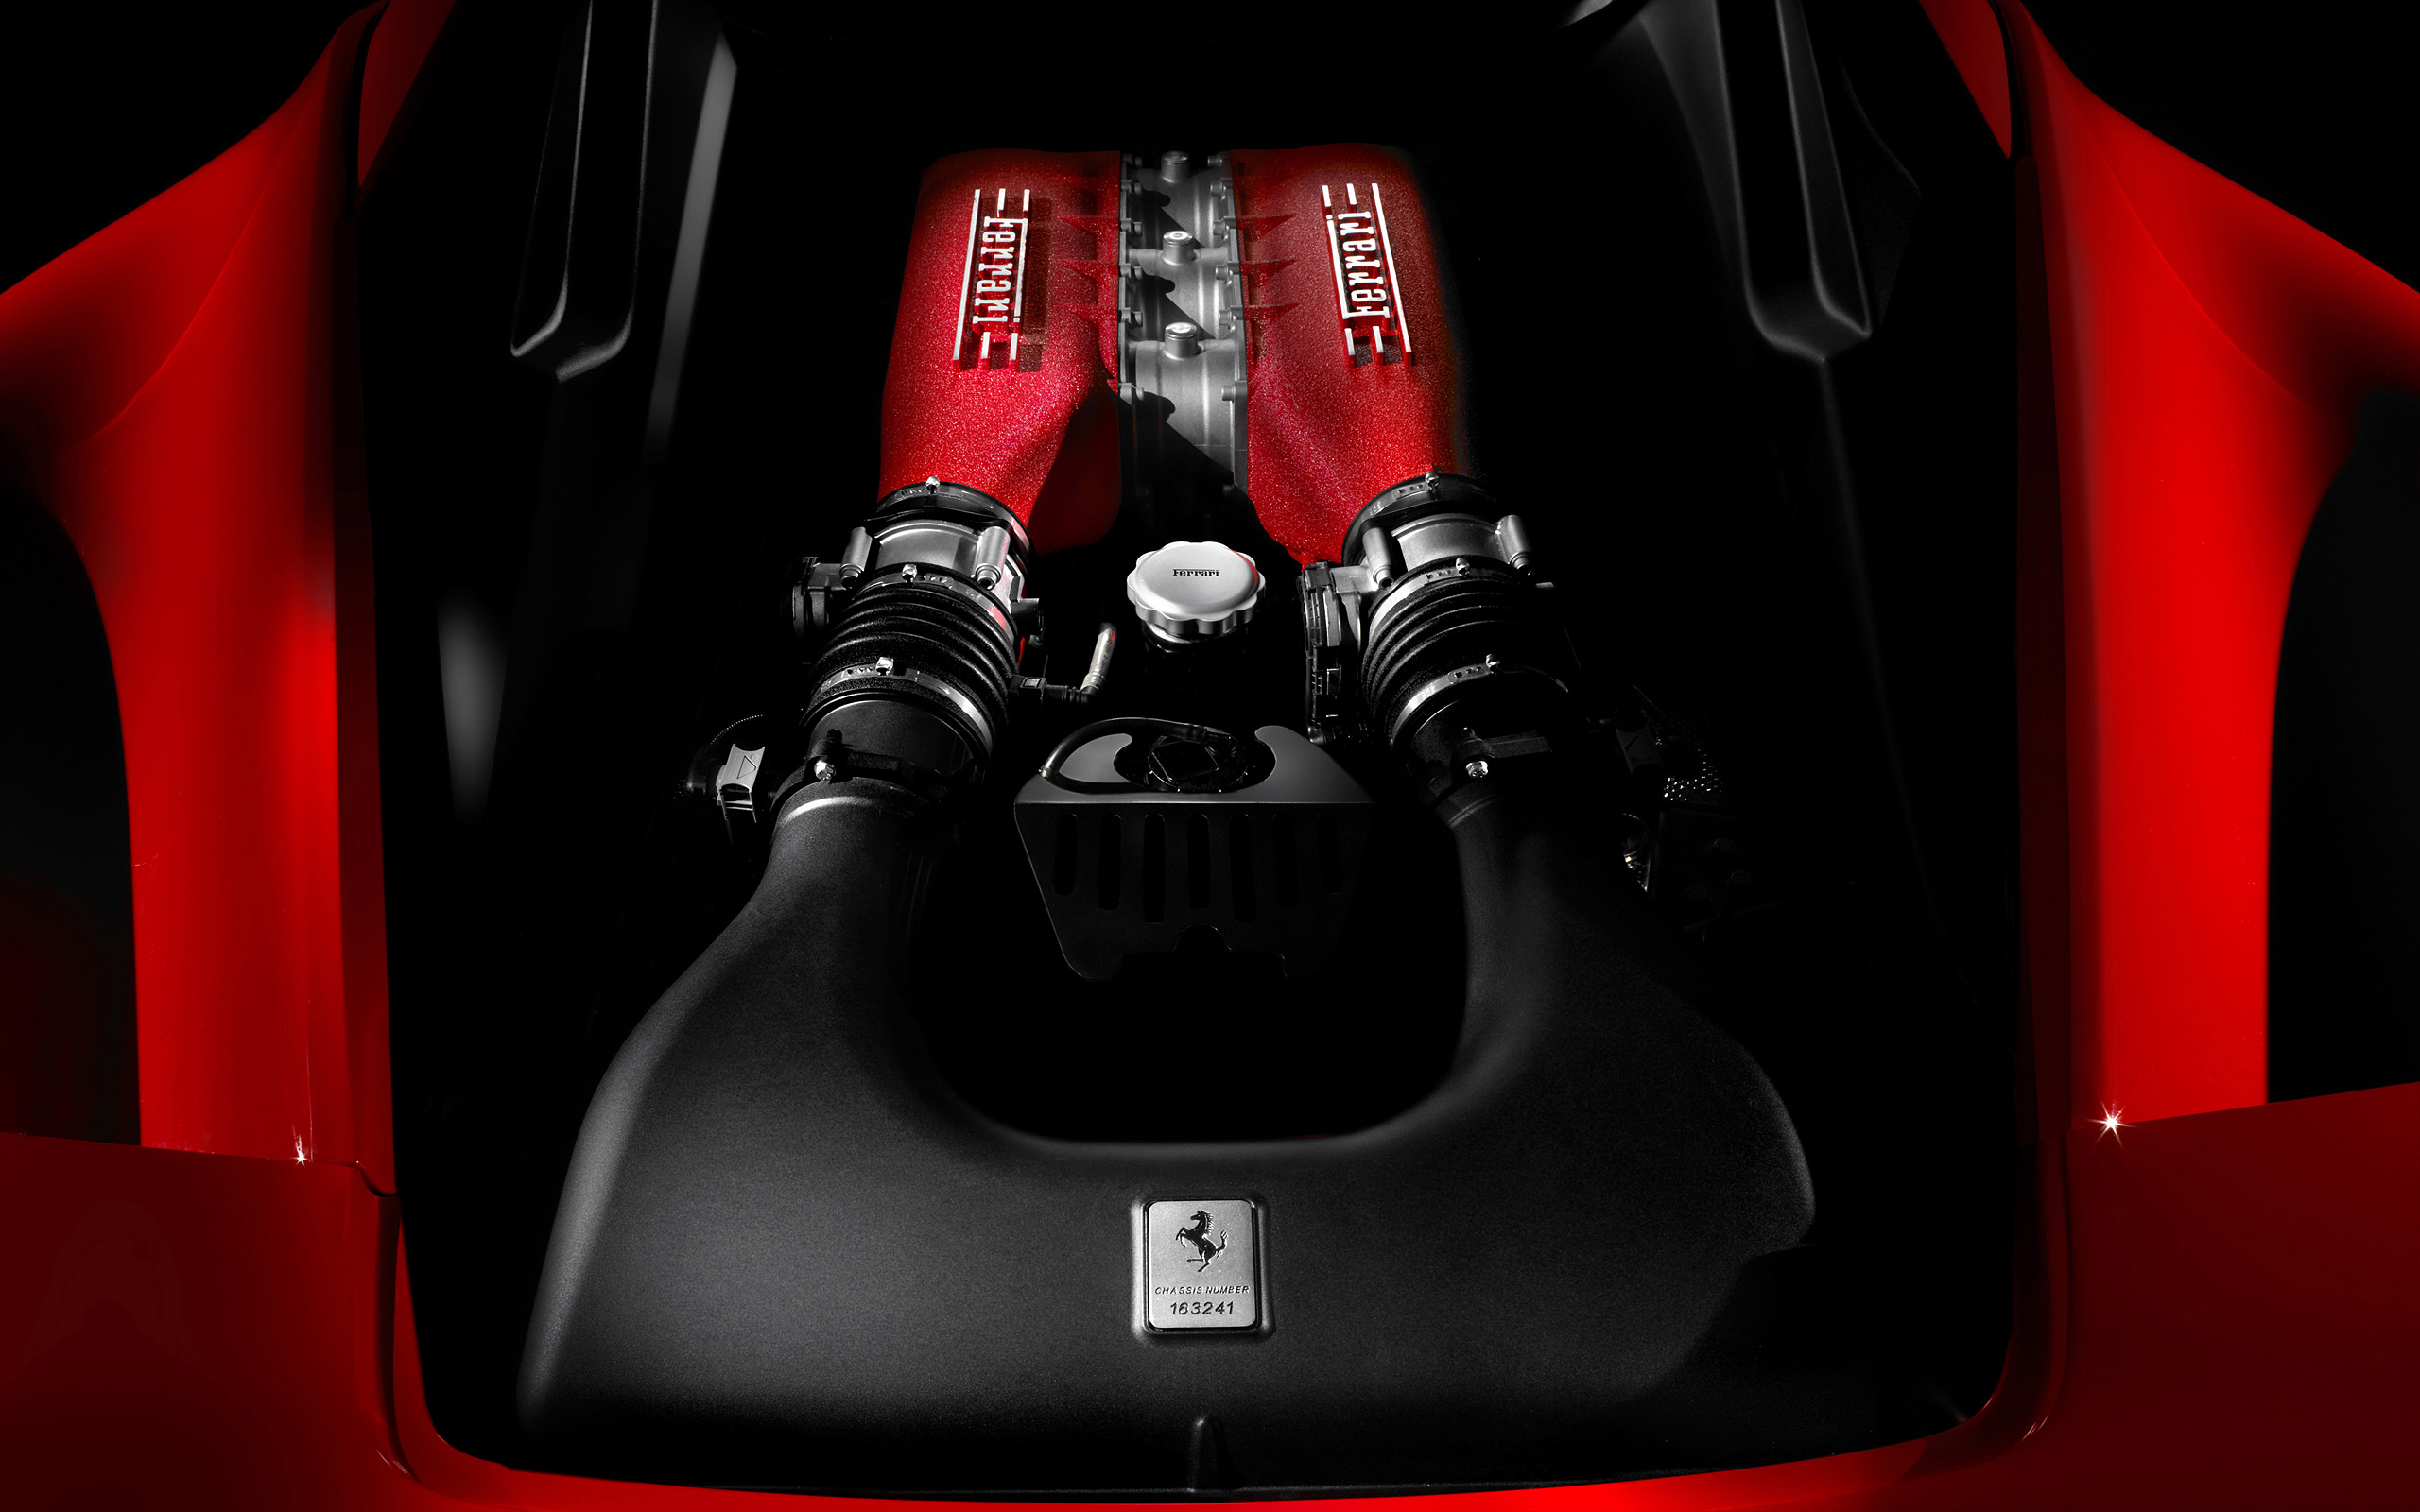  2010 Ferrari 458 Italia Wallpaper.